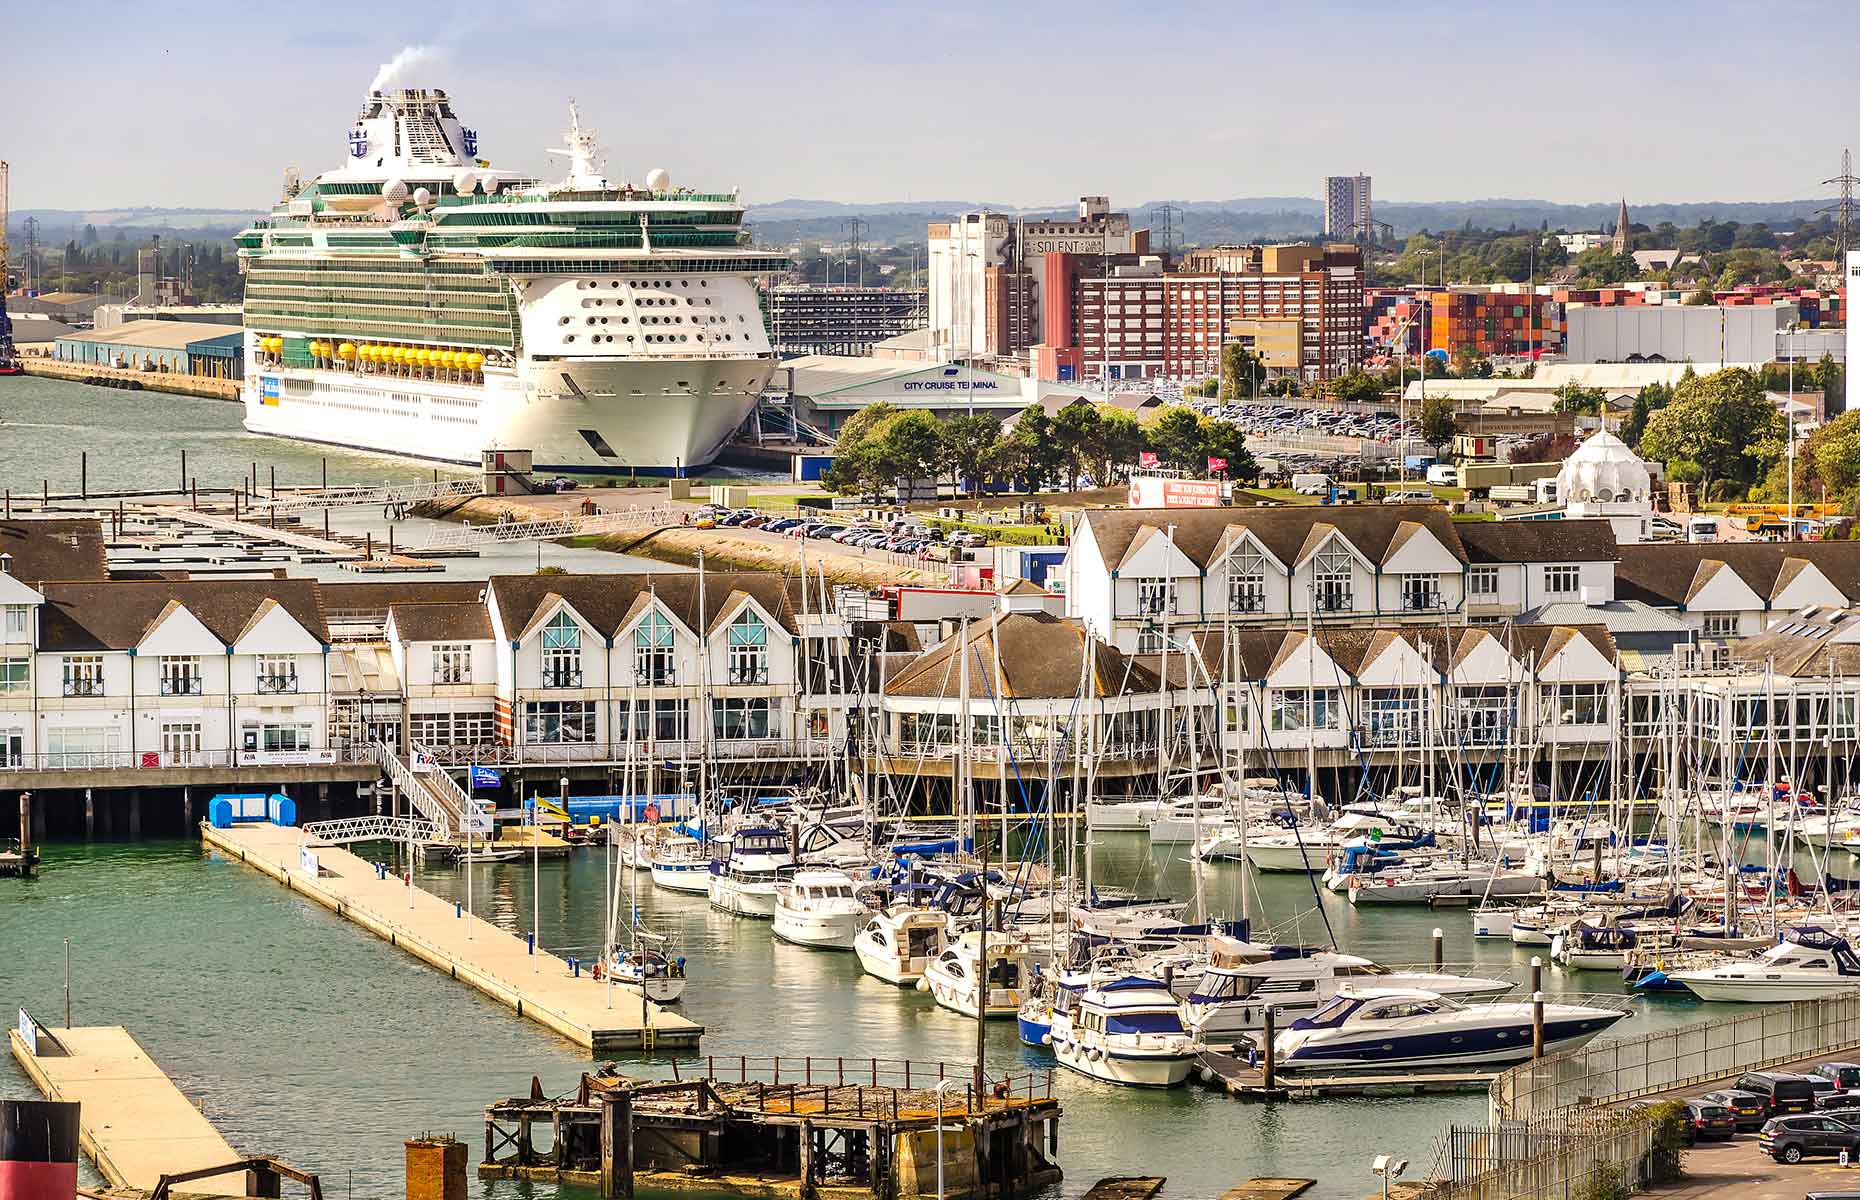 Cruise terminal at Southampton